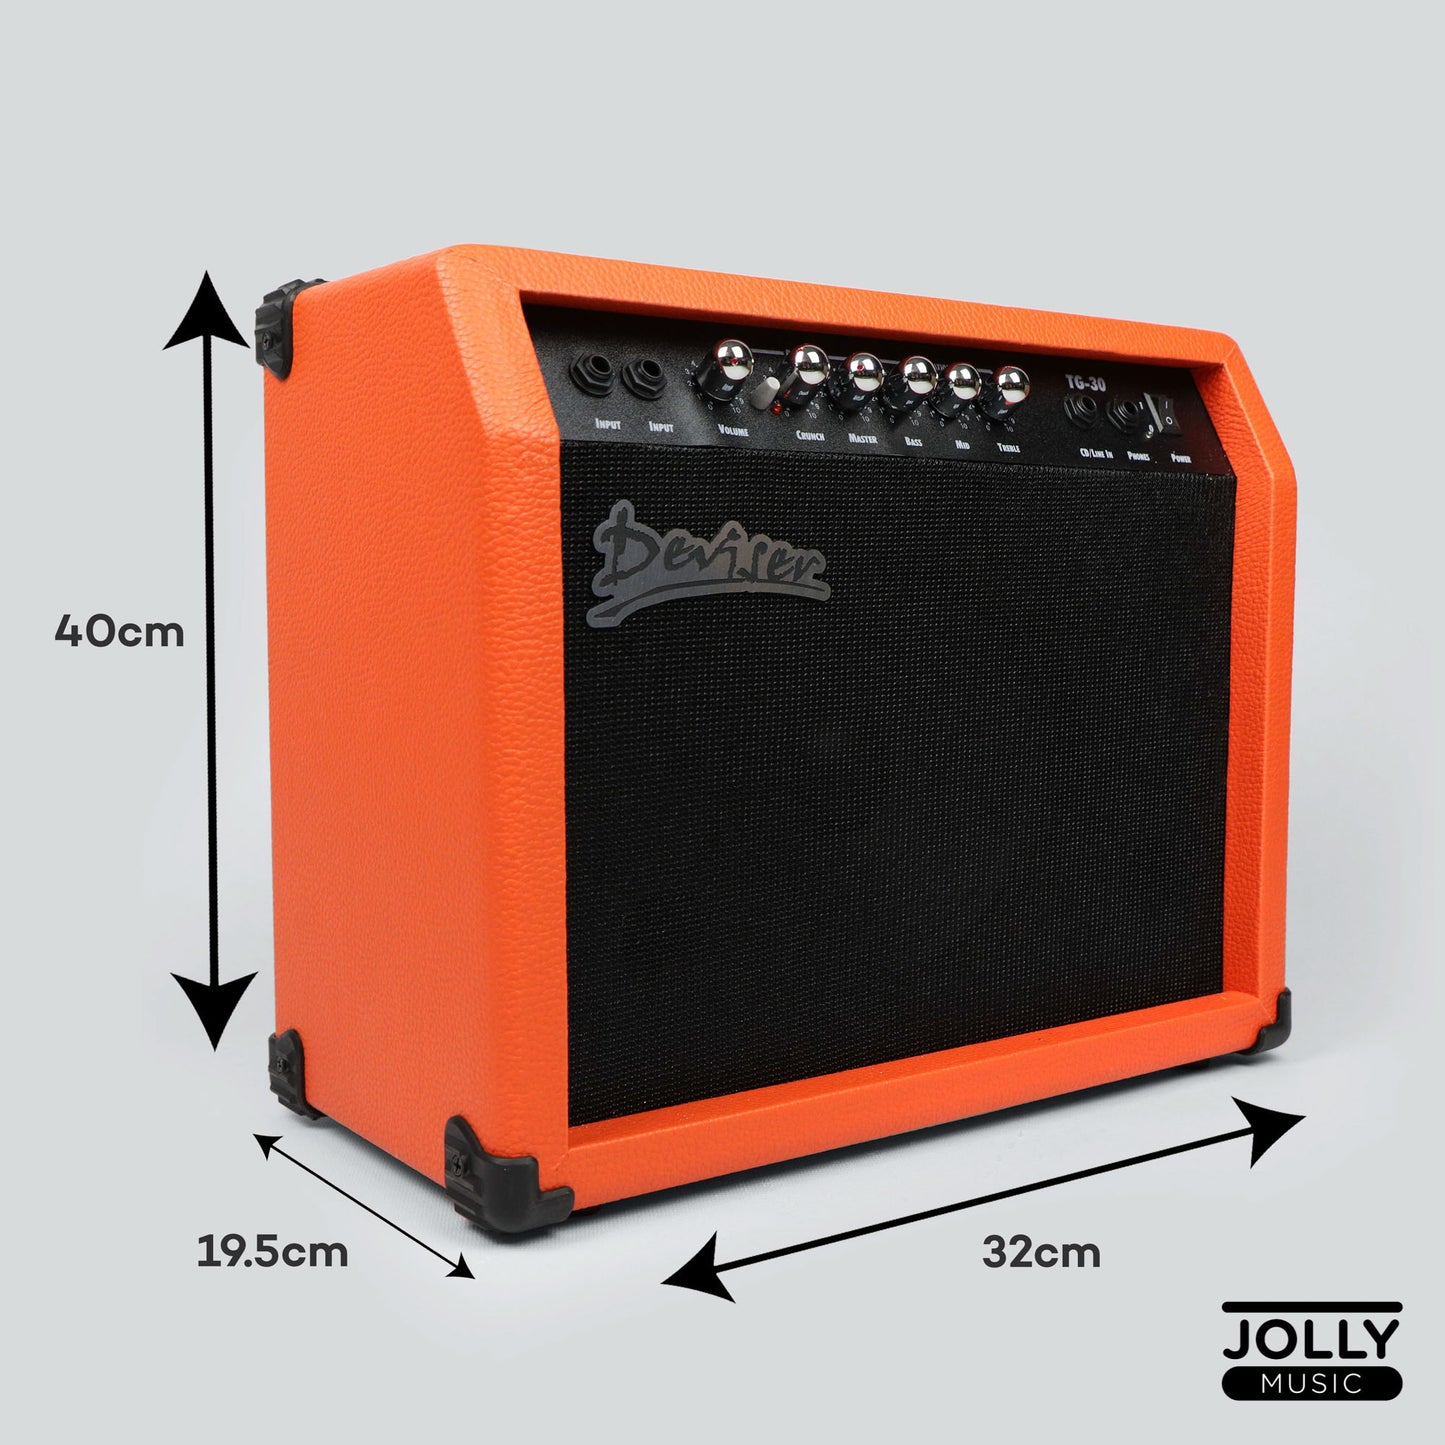 Deviser TG-30 Electric Guitar Amplifier 30 watts